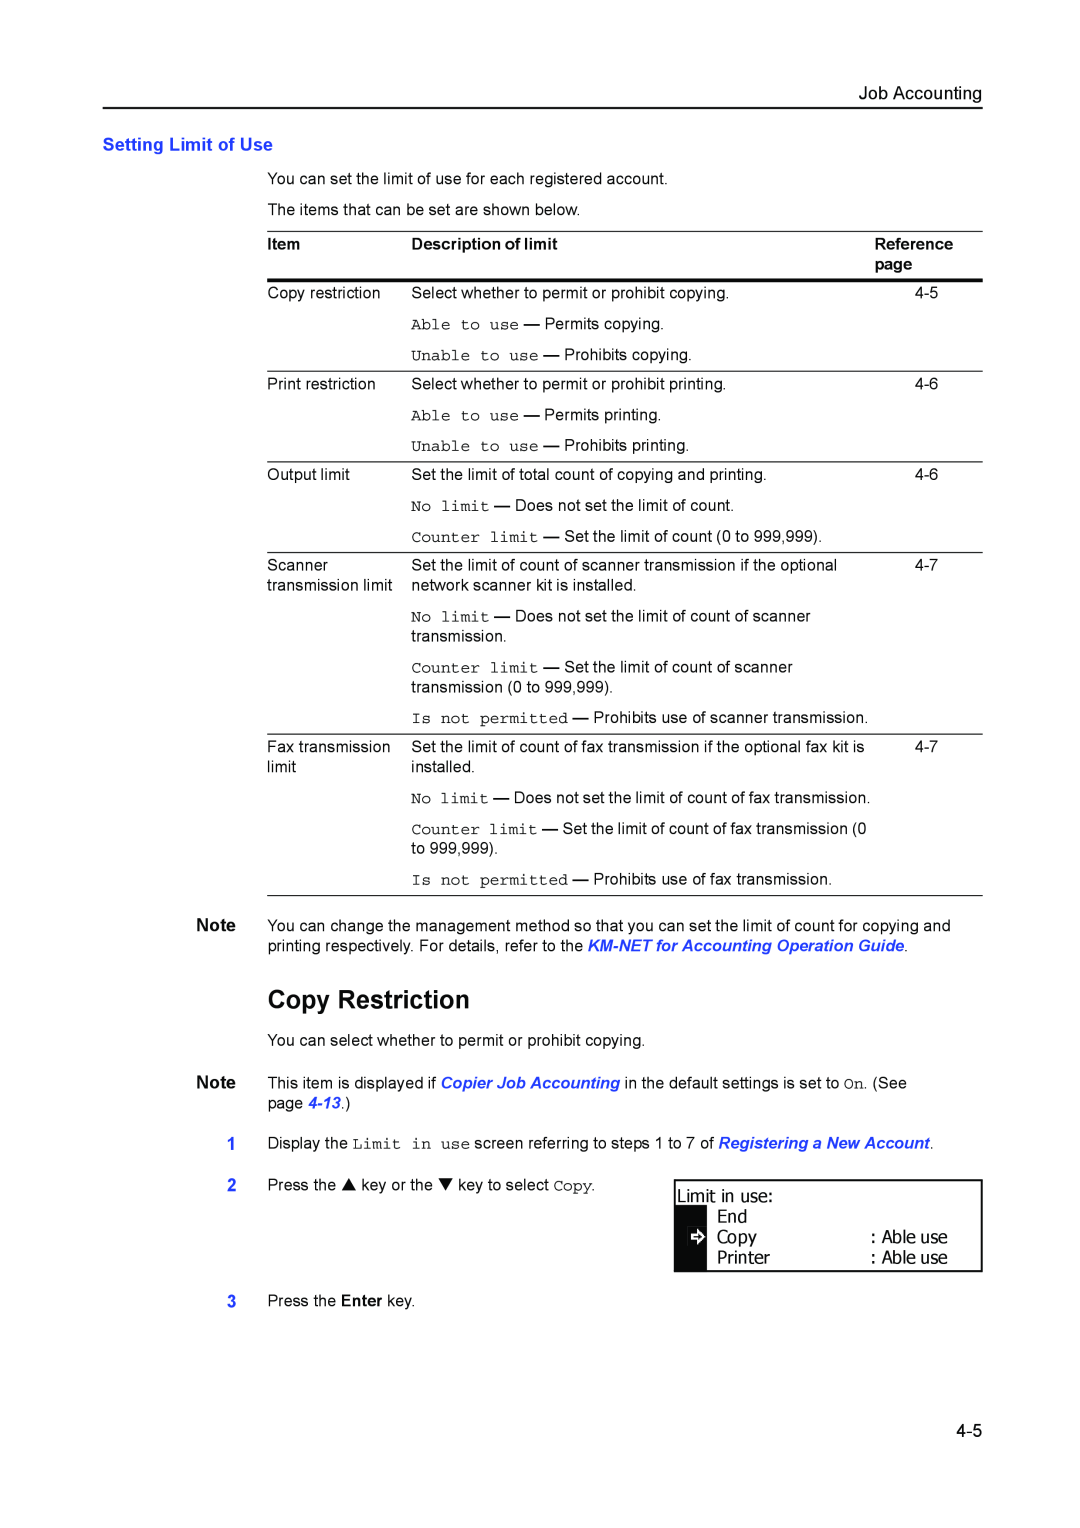 Kyocera 2050, 1650, 2550 manual Copy Restriction, Setting Limit of Use, Job Accounting 